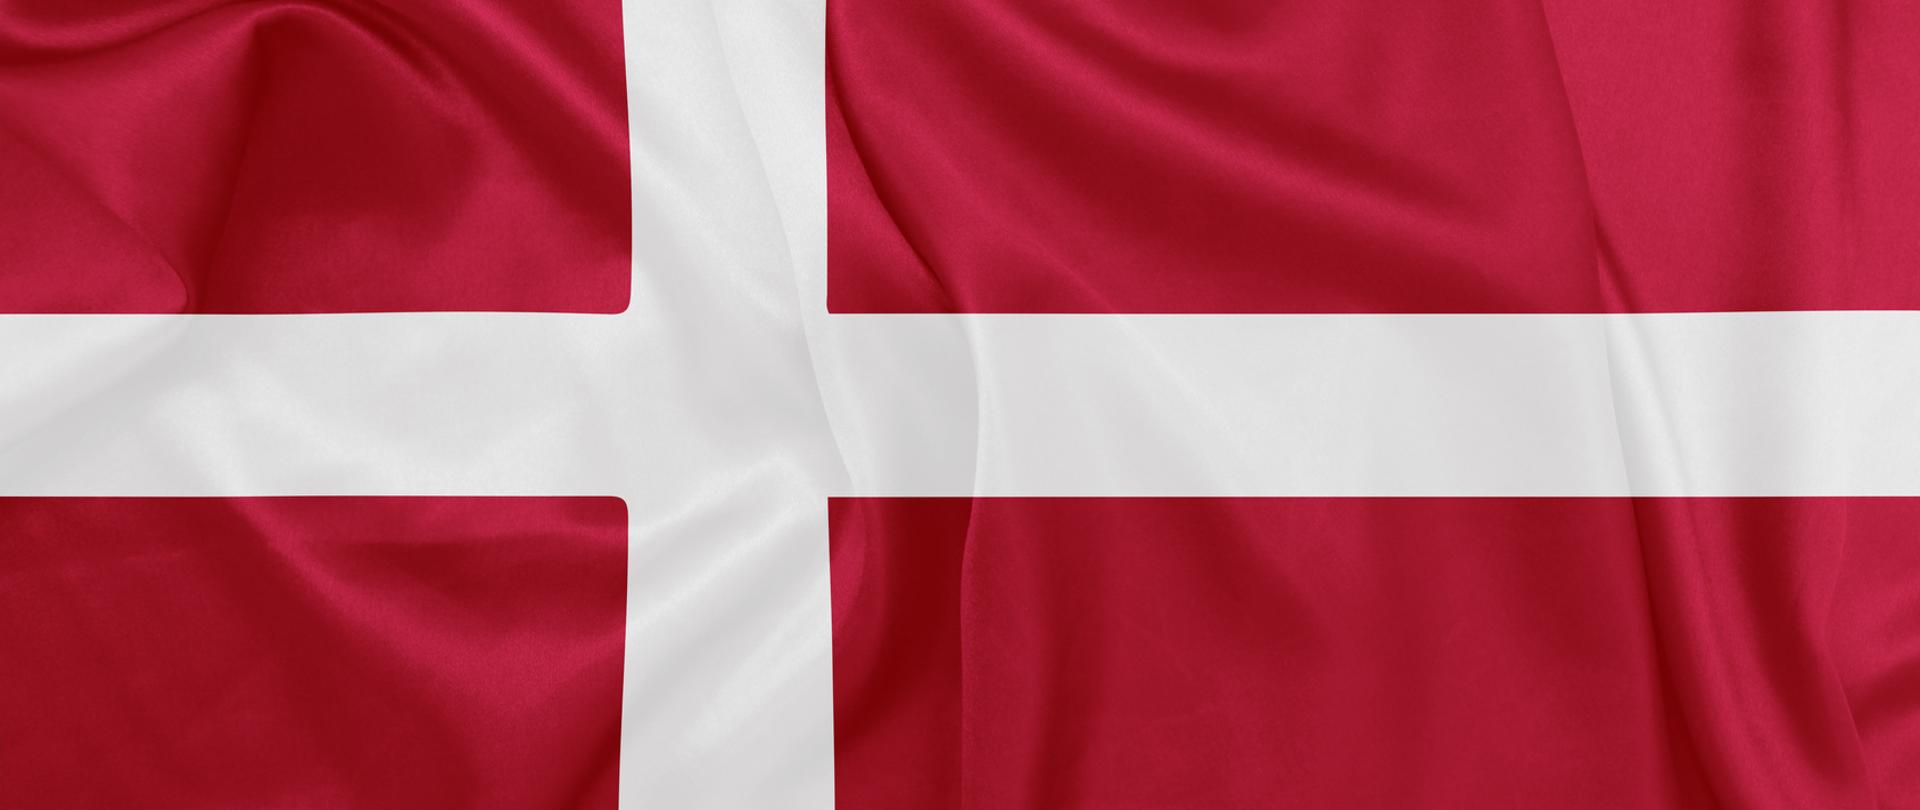 Denmark - Waving national flag on silk texture